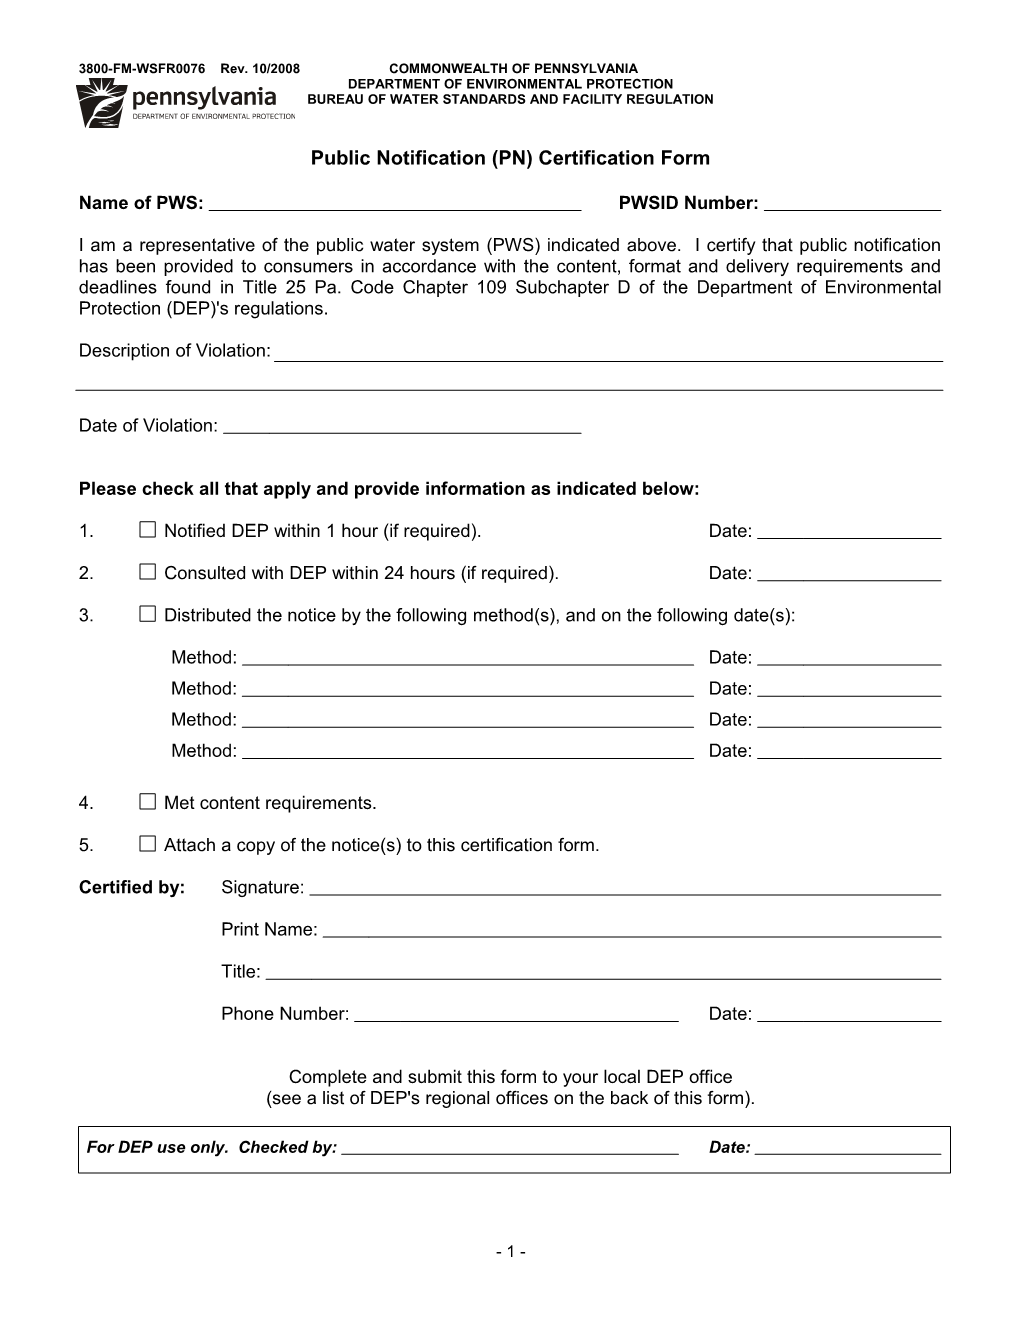 Public Notification (PN) Certification Form